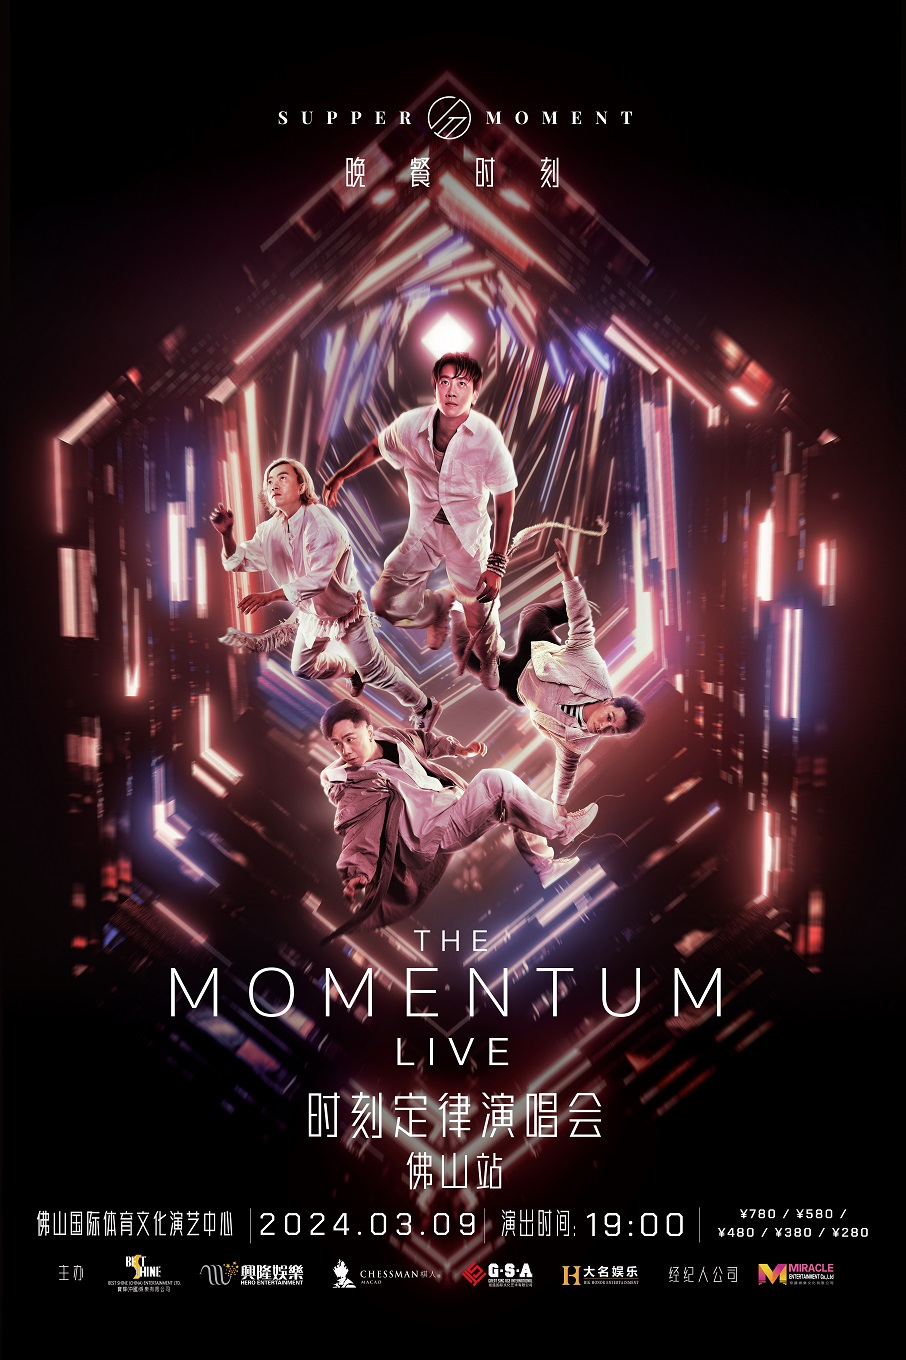 [佛山]Supper Moment“THE MOMENTUM LIVE”时刻定律演唱会-佛山站